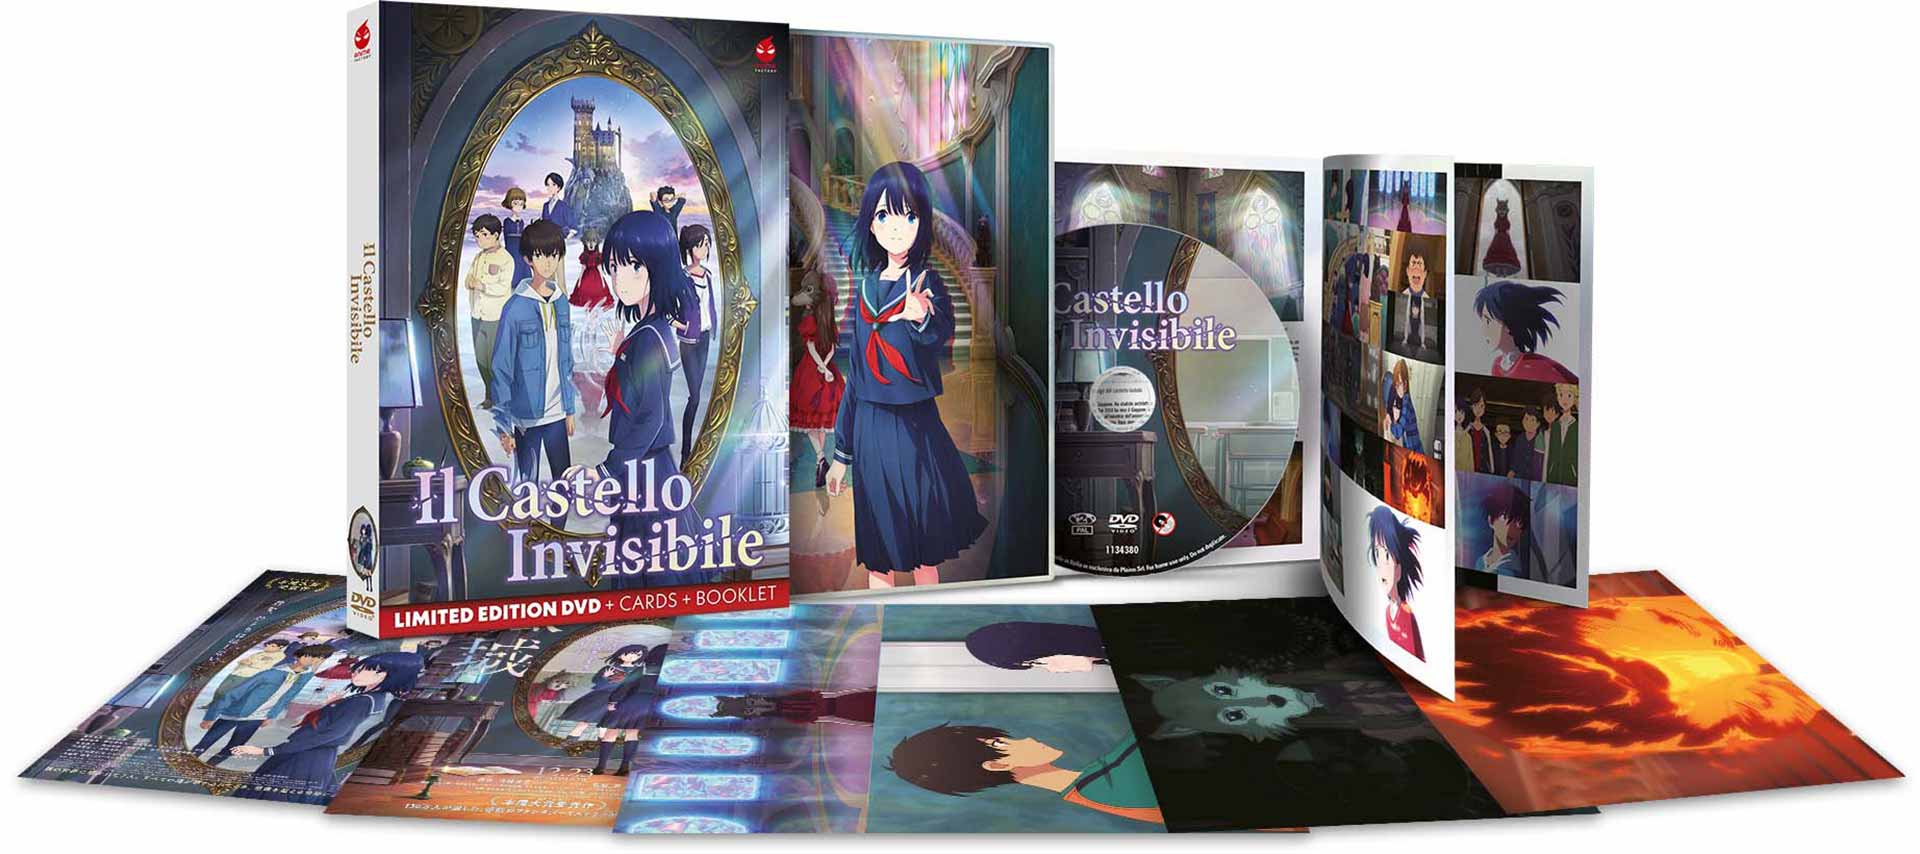 Il Castello Invisibile - Limited Edition DVD + Cards + Booklet (DVD) Image 2